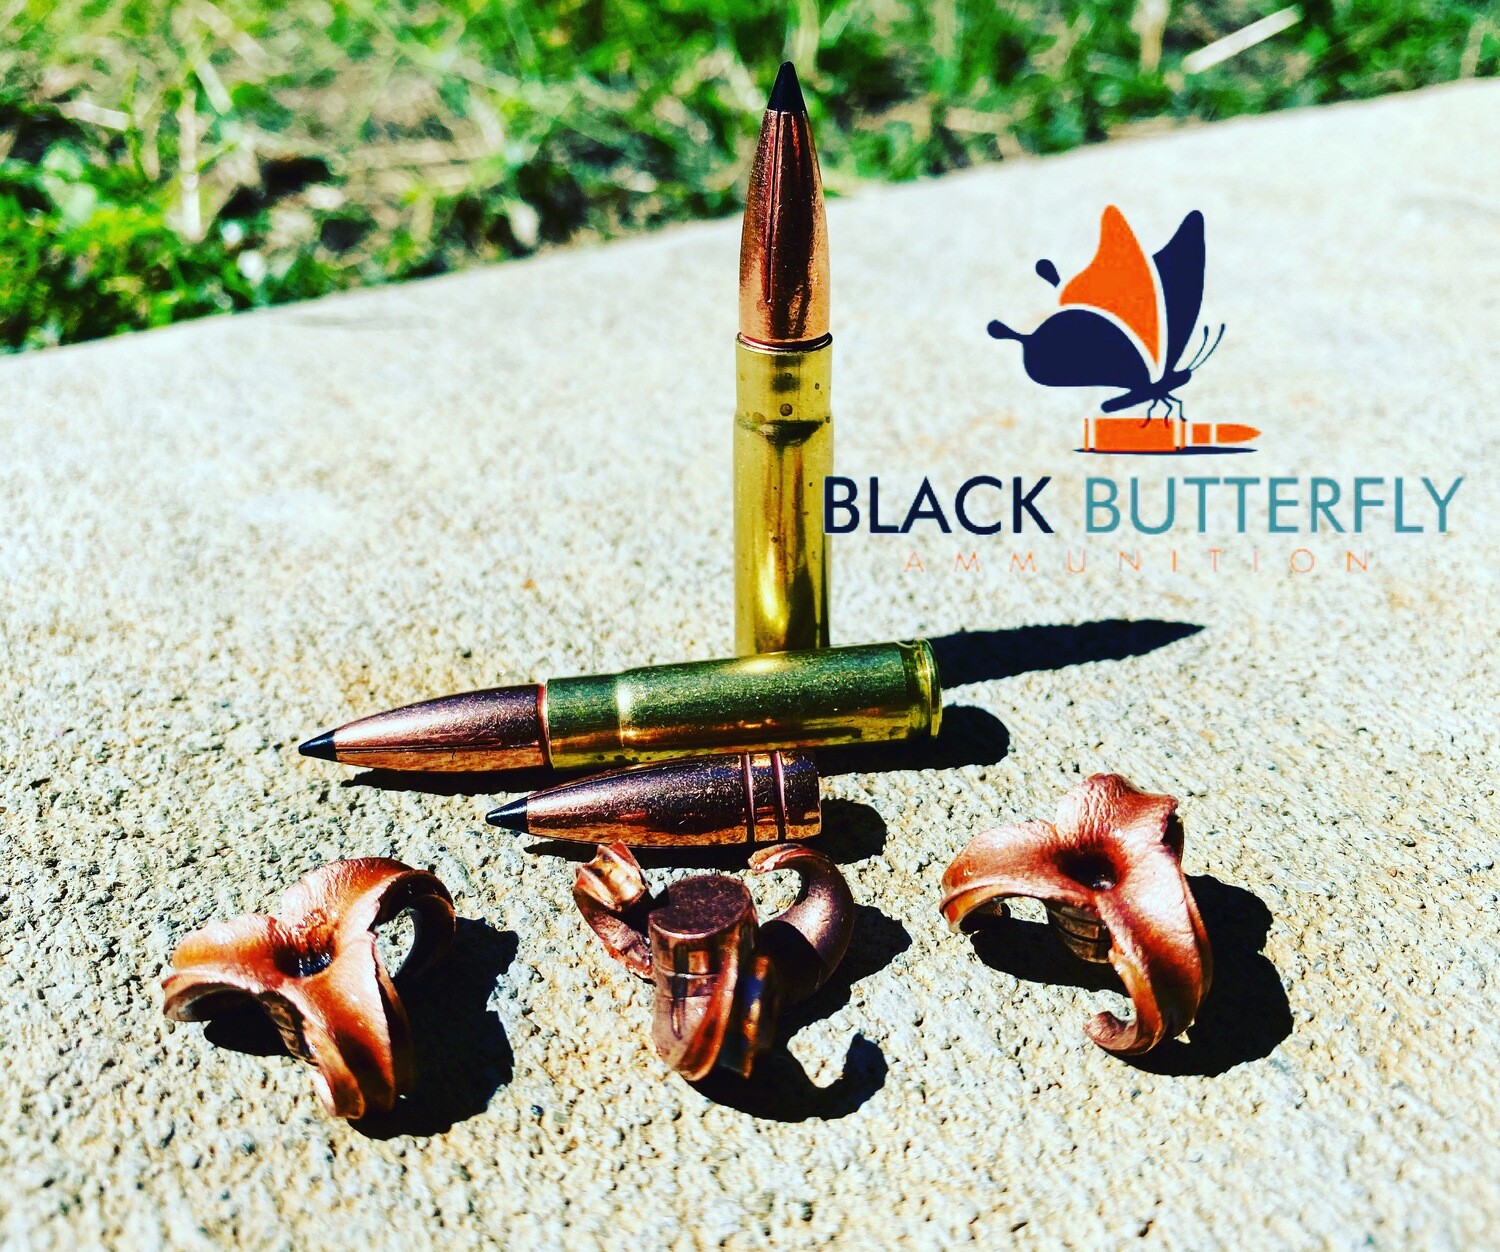 Black Butterfly Ammunition Premium, .300 AAC Blackout, 110 gr, 50 Rounds, Maker Expanding Copper &quot;BOAR TOOTH&quot;